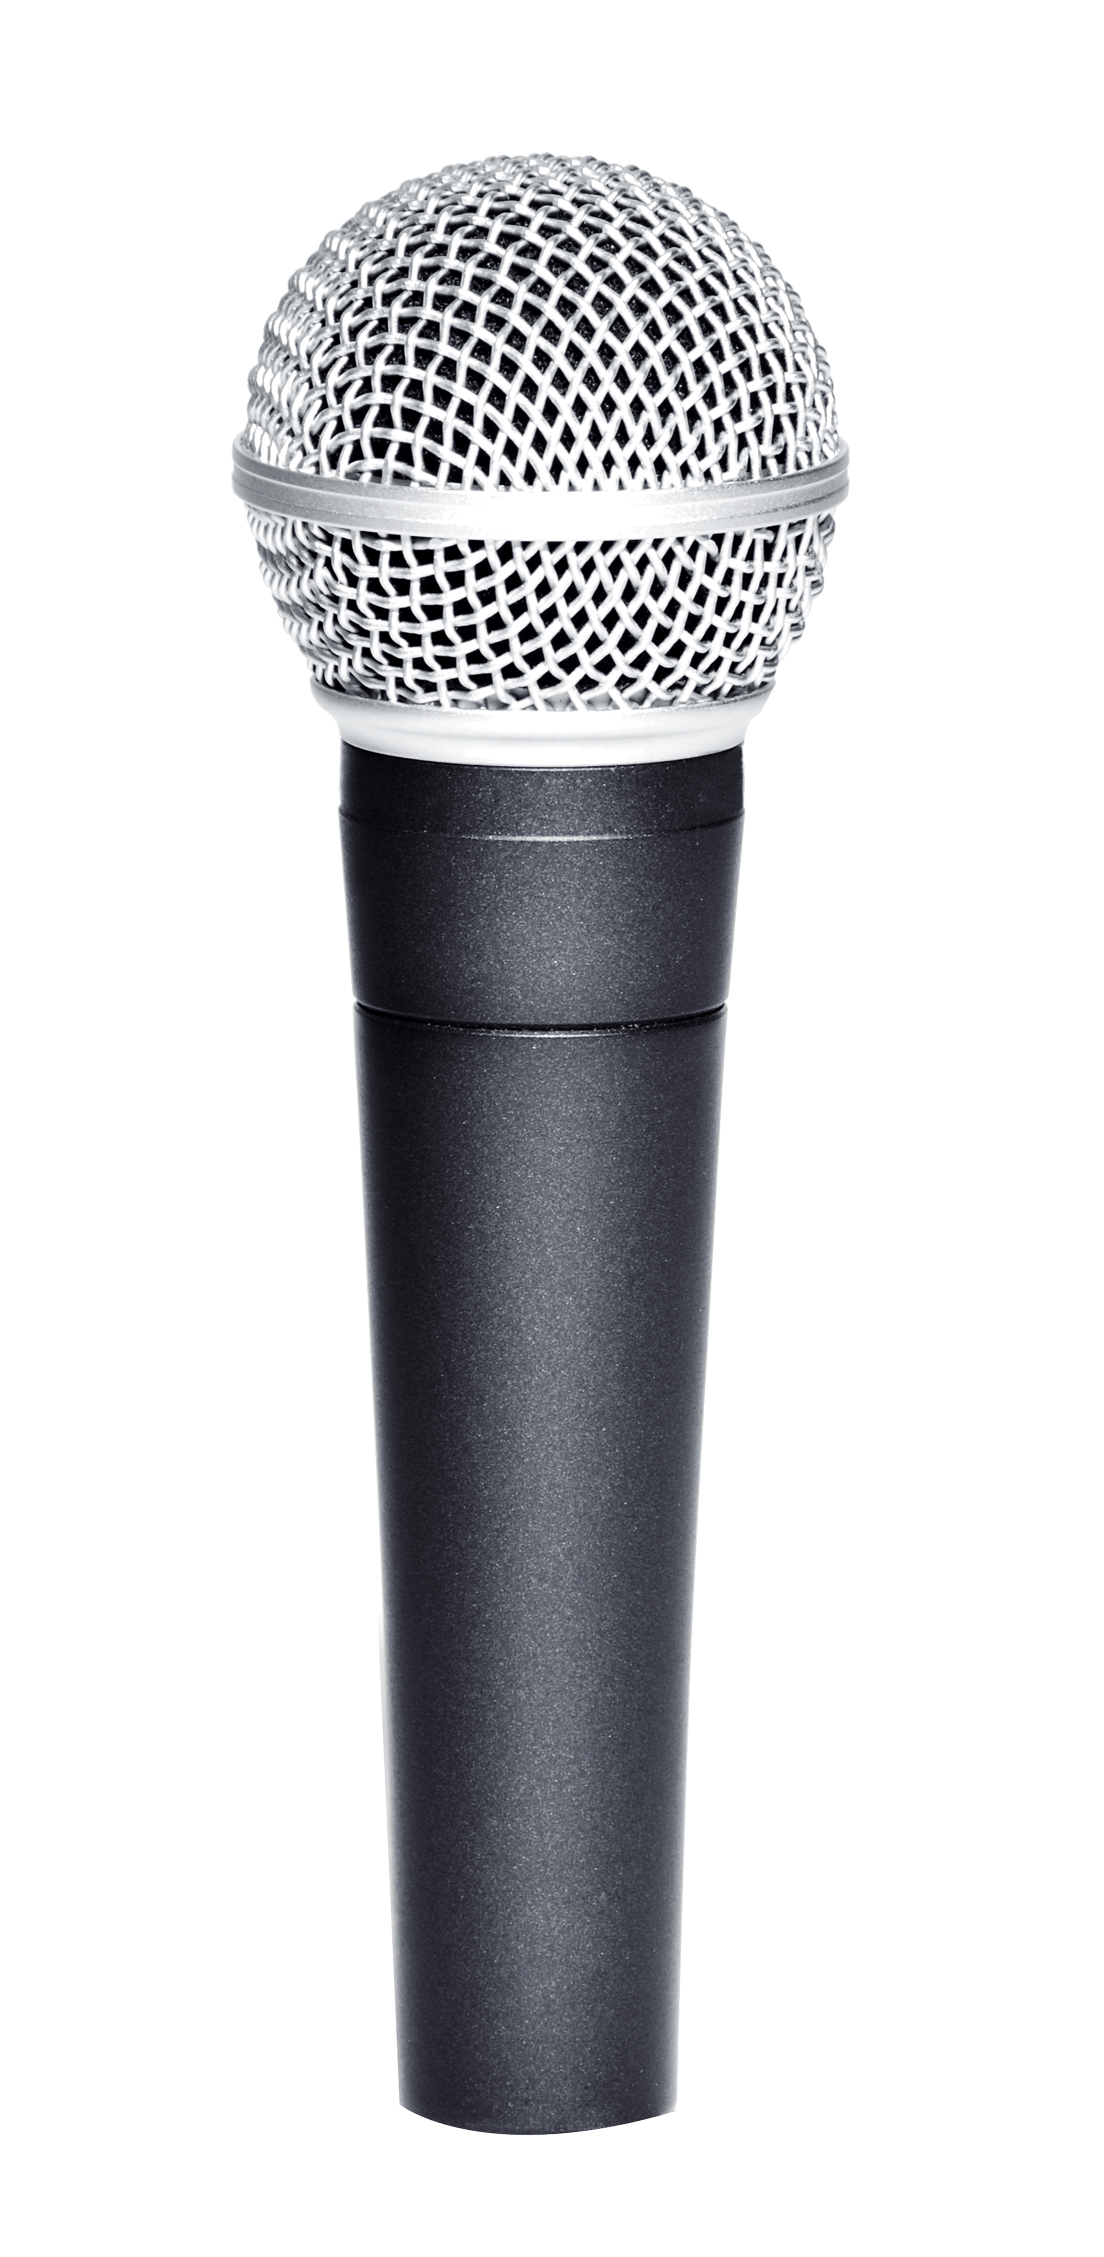 Download Microphone Transparent Image HQ PNG Image | FreePNGImg